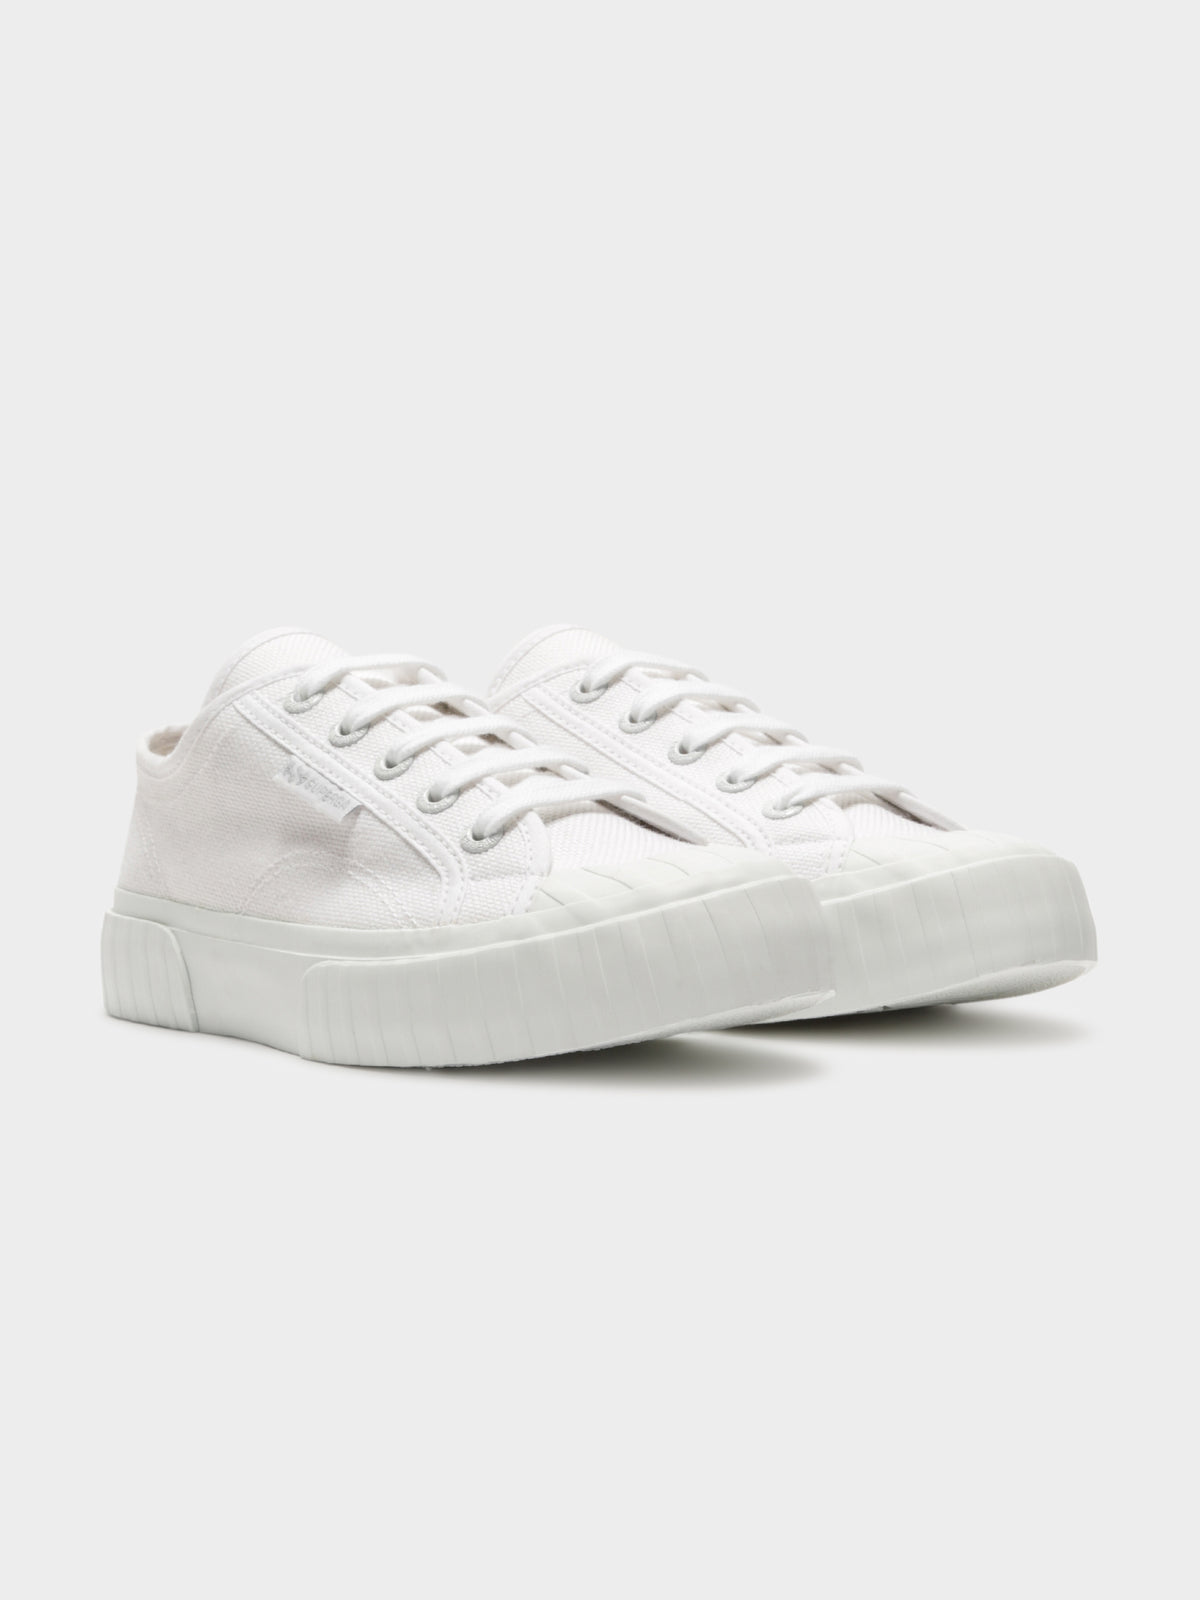 2630 Cotu Sneakers in White